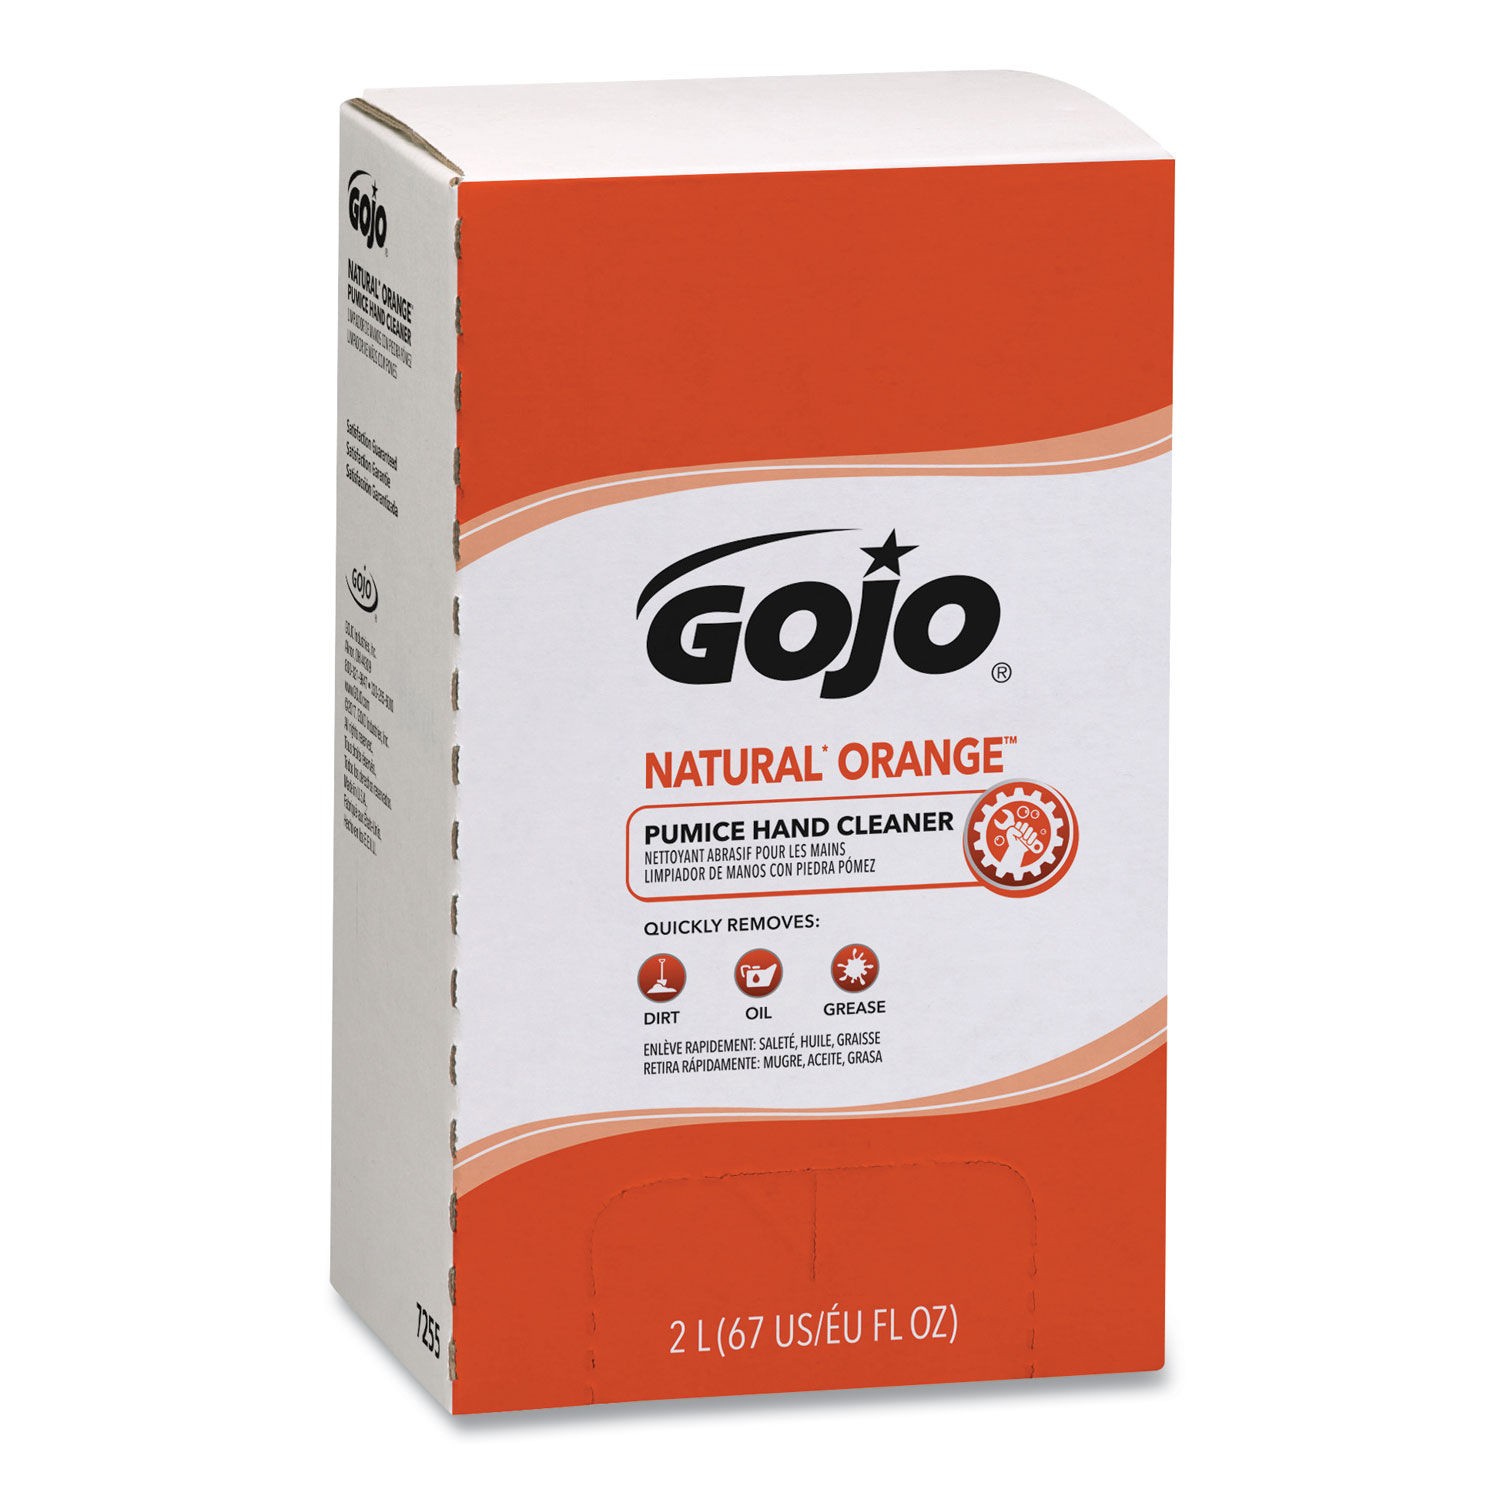 Gojo Natural Orange Pumice Hand Cleaner, Citrus, 2000 ml Refill, 4/Carton